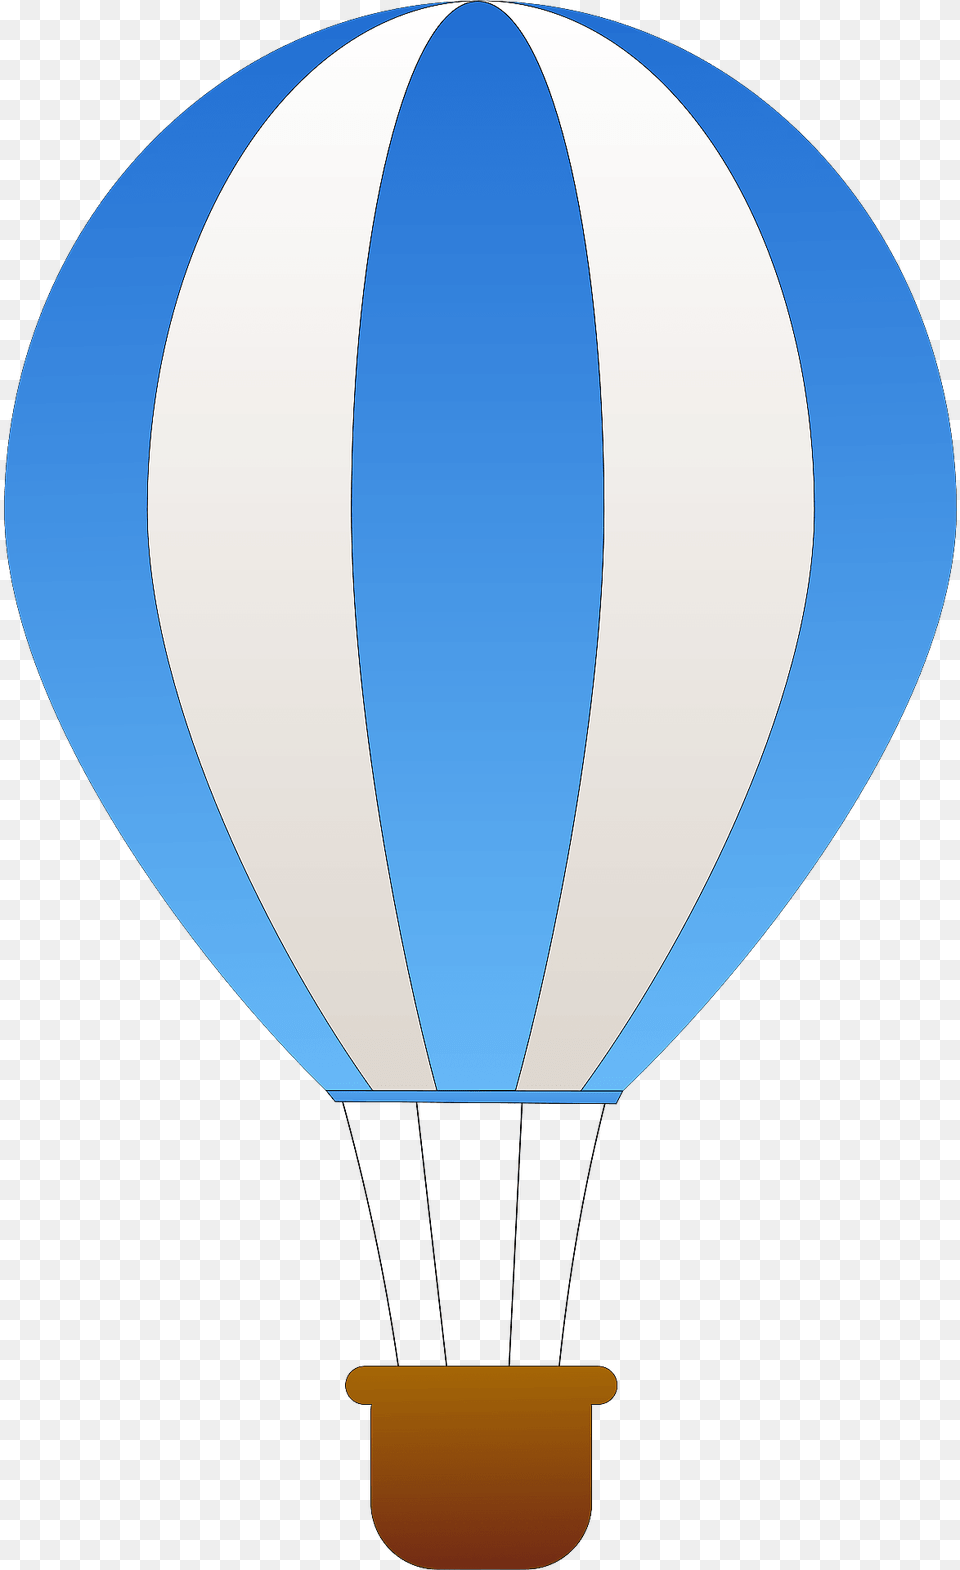 Blue And White Vertical Striped Hot Air Balloon Clipart, Aircraft, Hot Air Balloon, Transportation, Vehicle Png